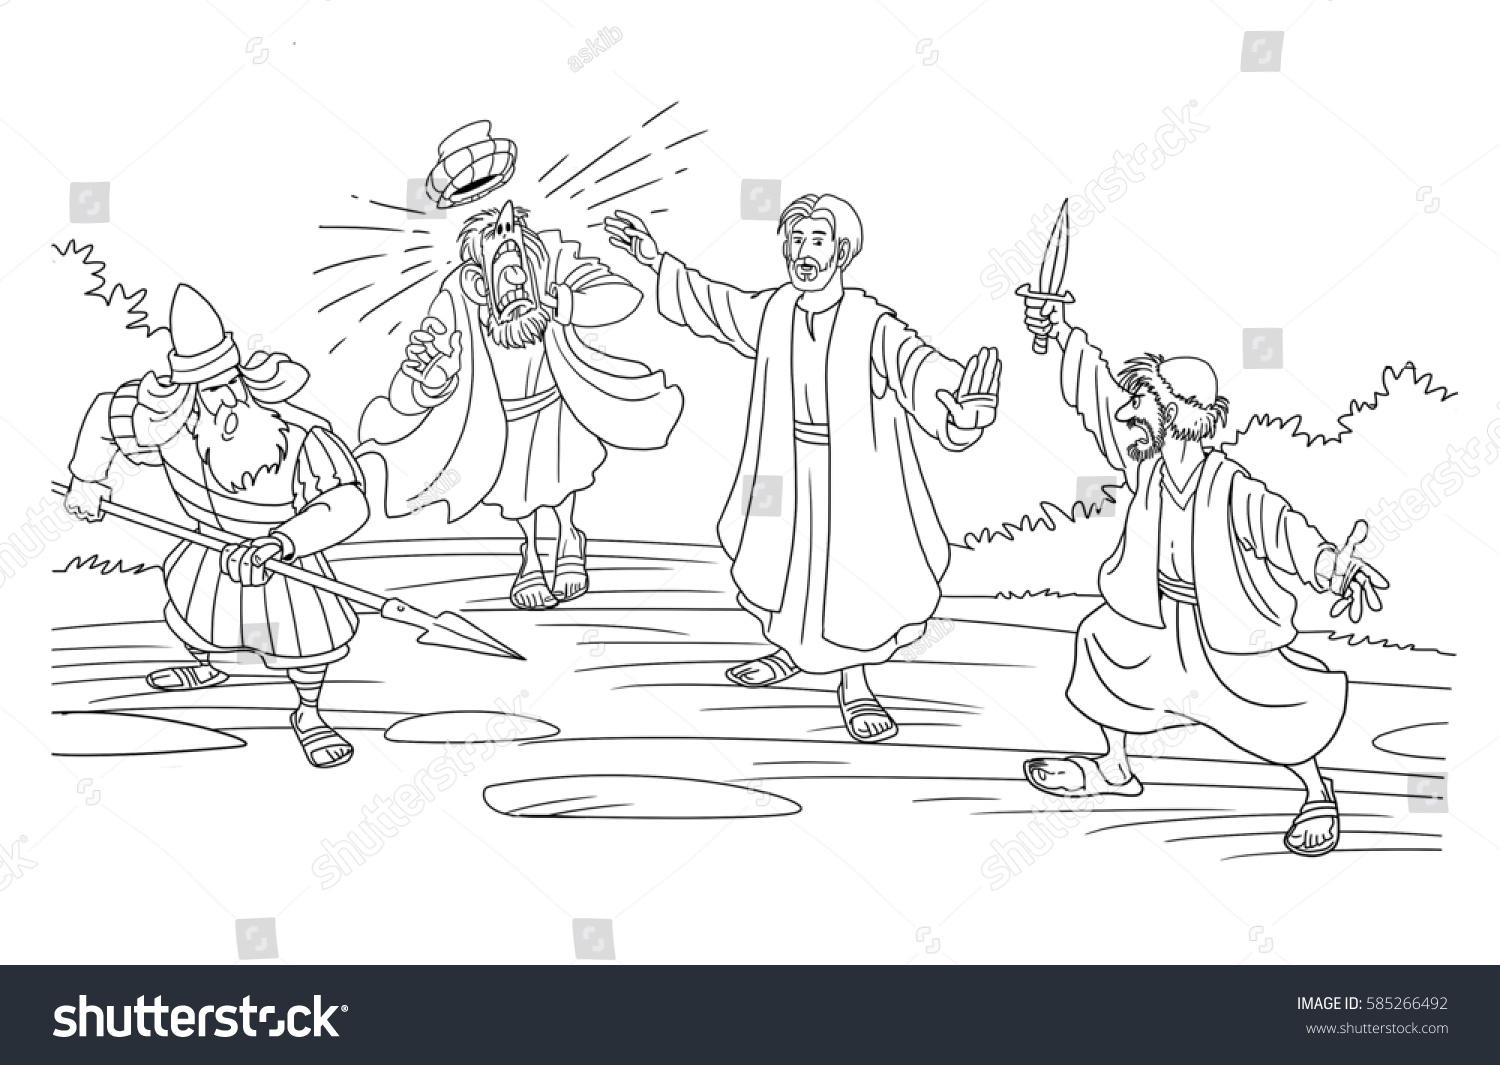 Soldiers arrested jesus garden gethsemane peter stock illustration